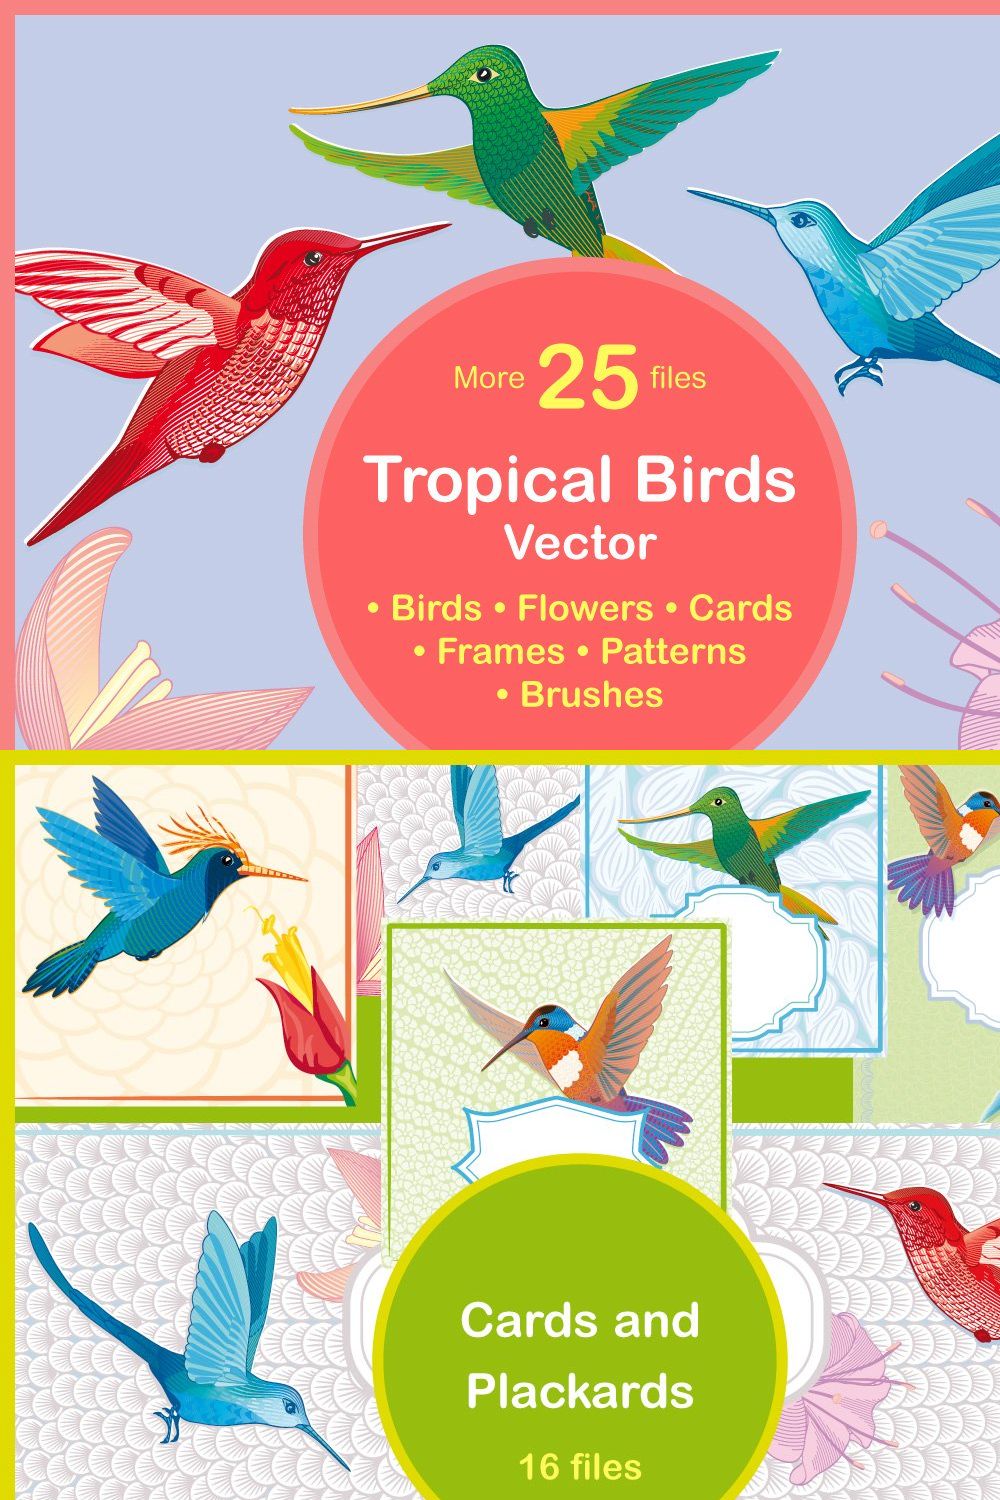 Tropical Birds pinterest preview image.